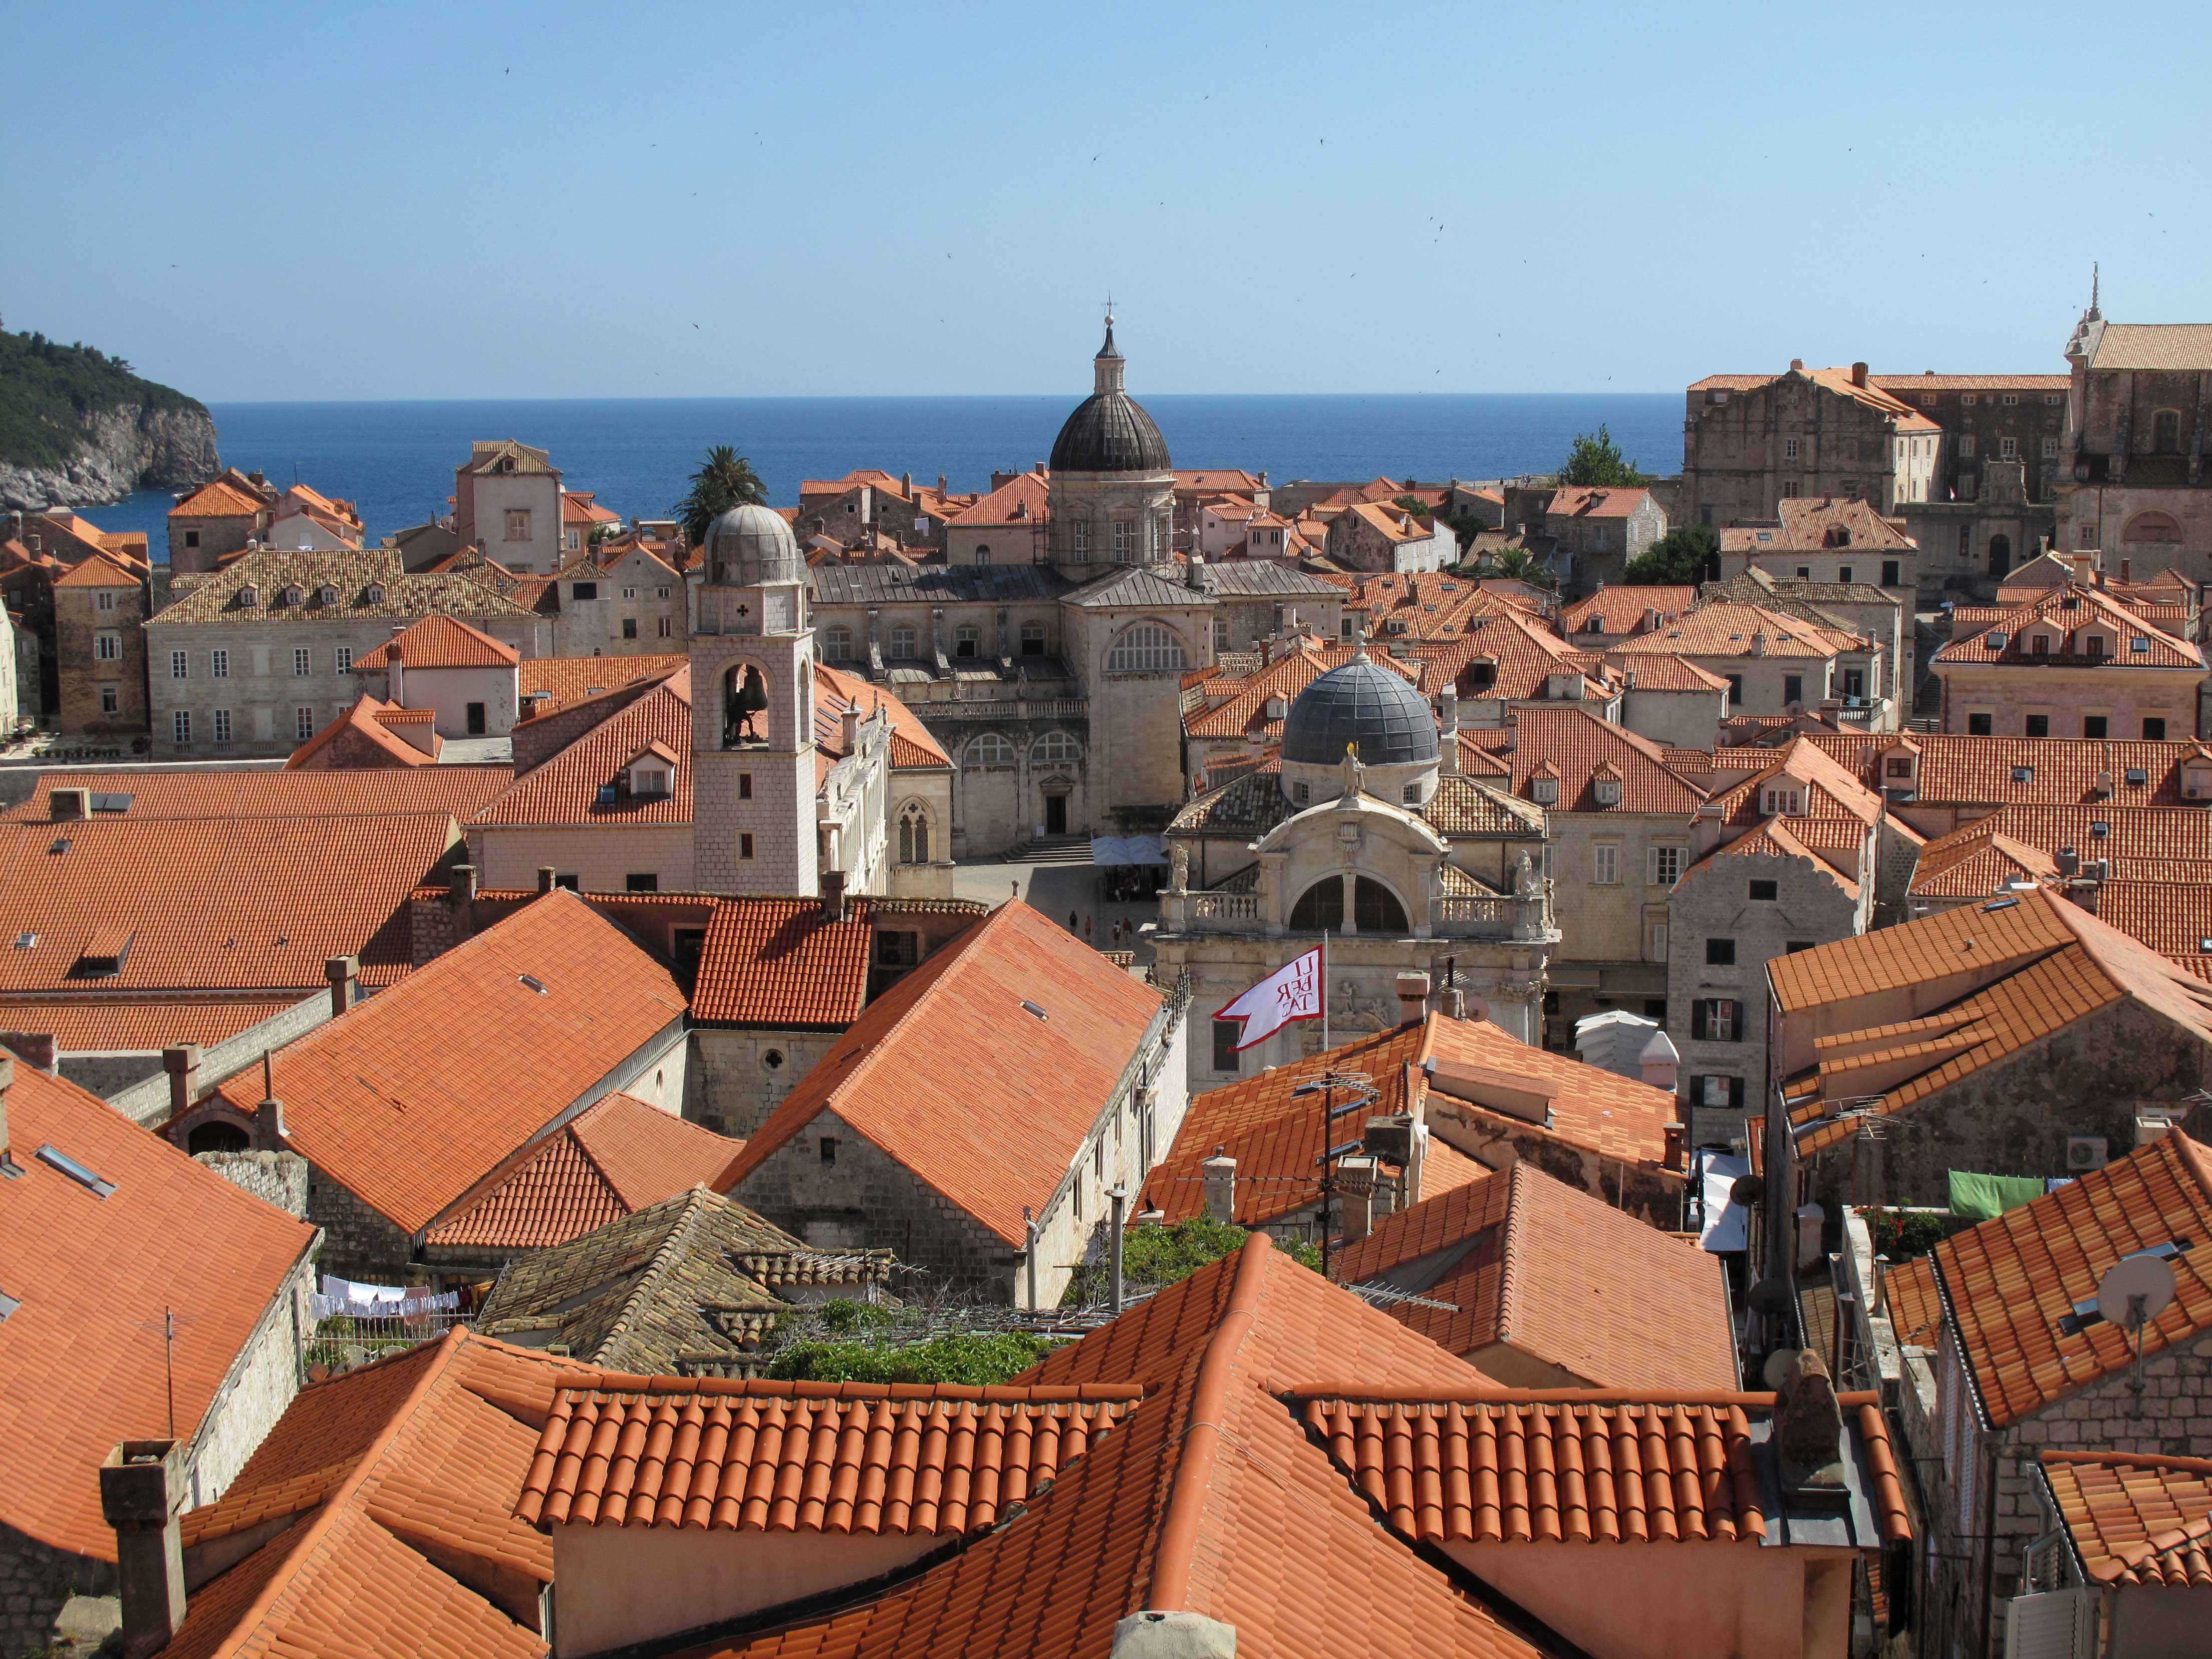 Game of Thrones' King's Landing, Dubrovnik, Croatia, Caps Tourists